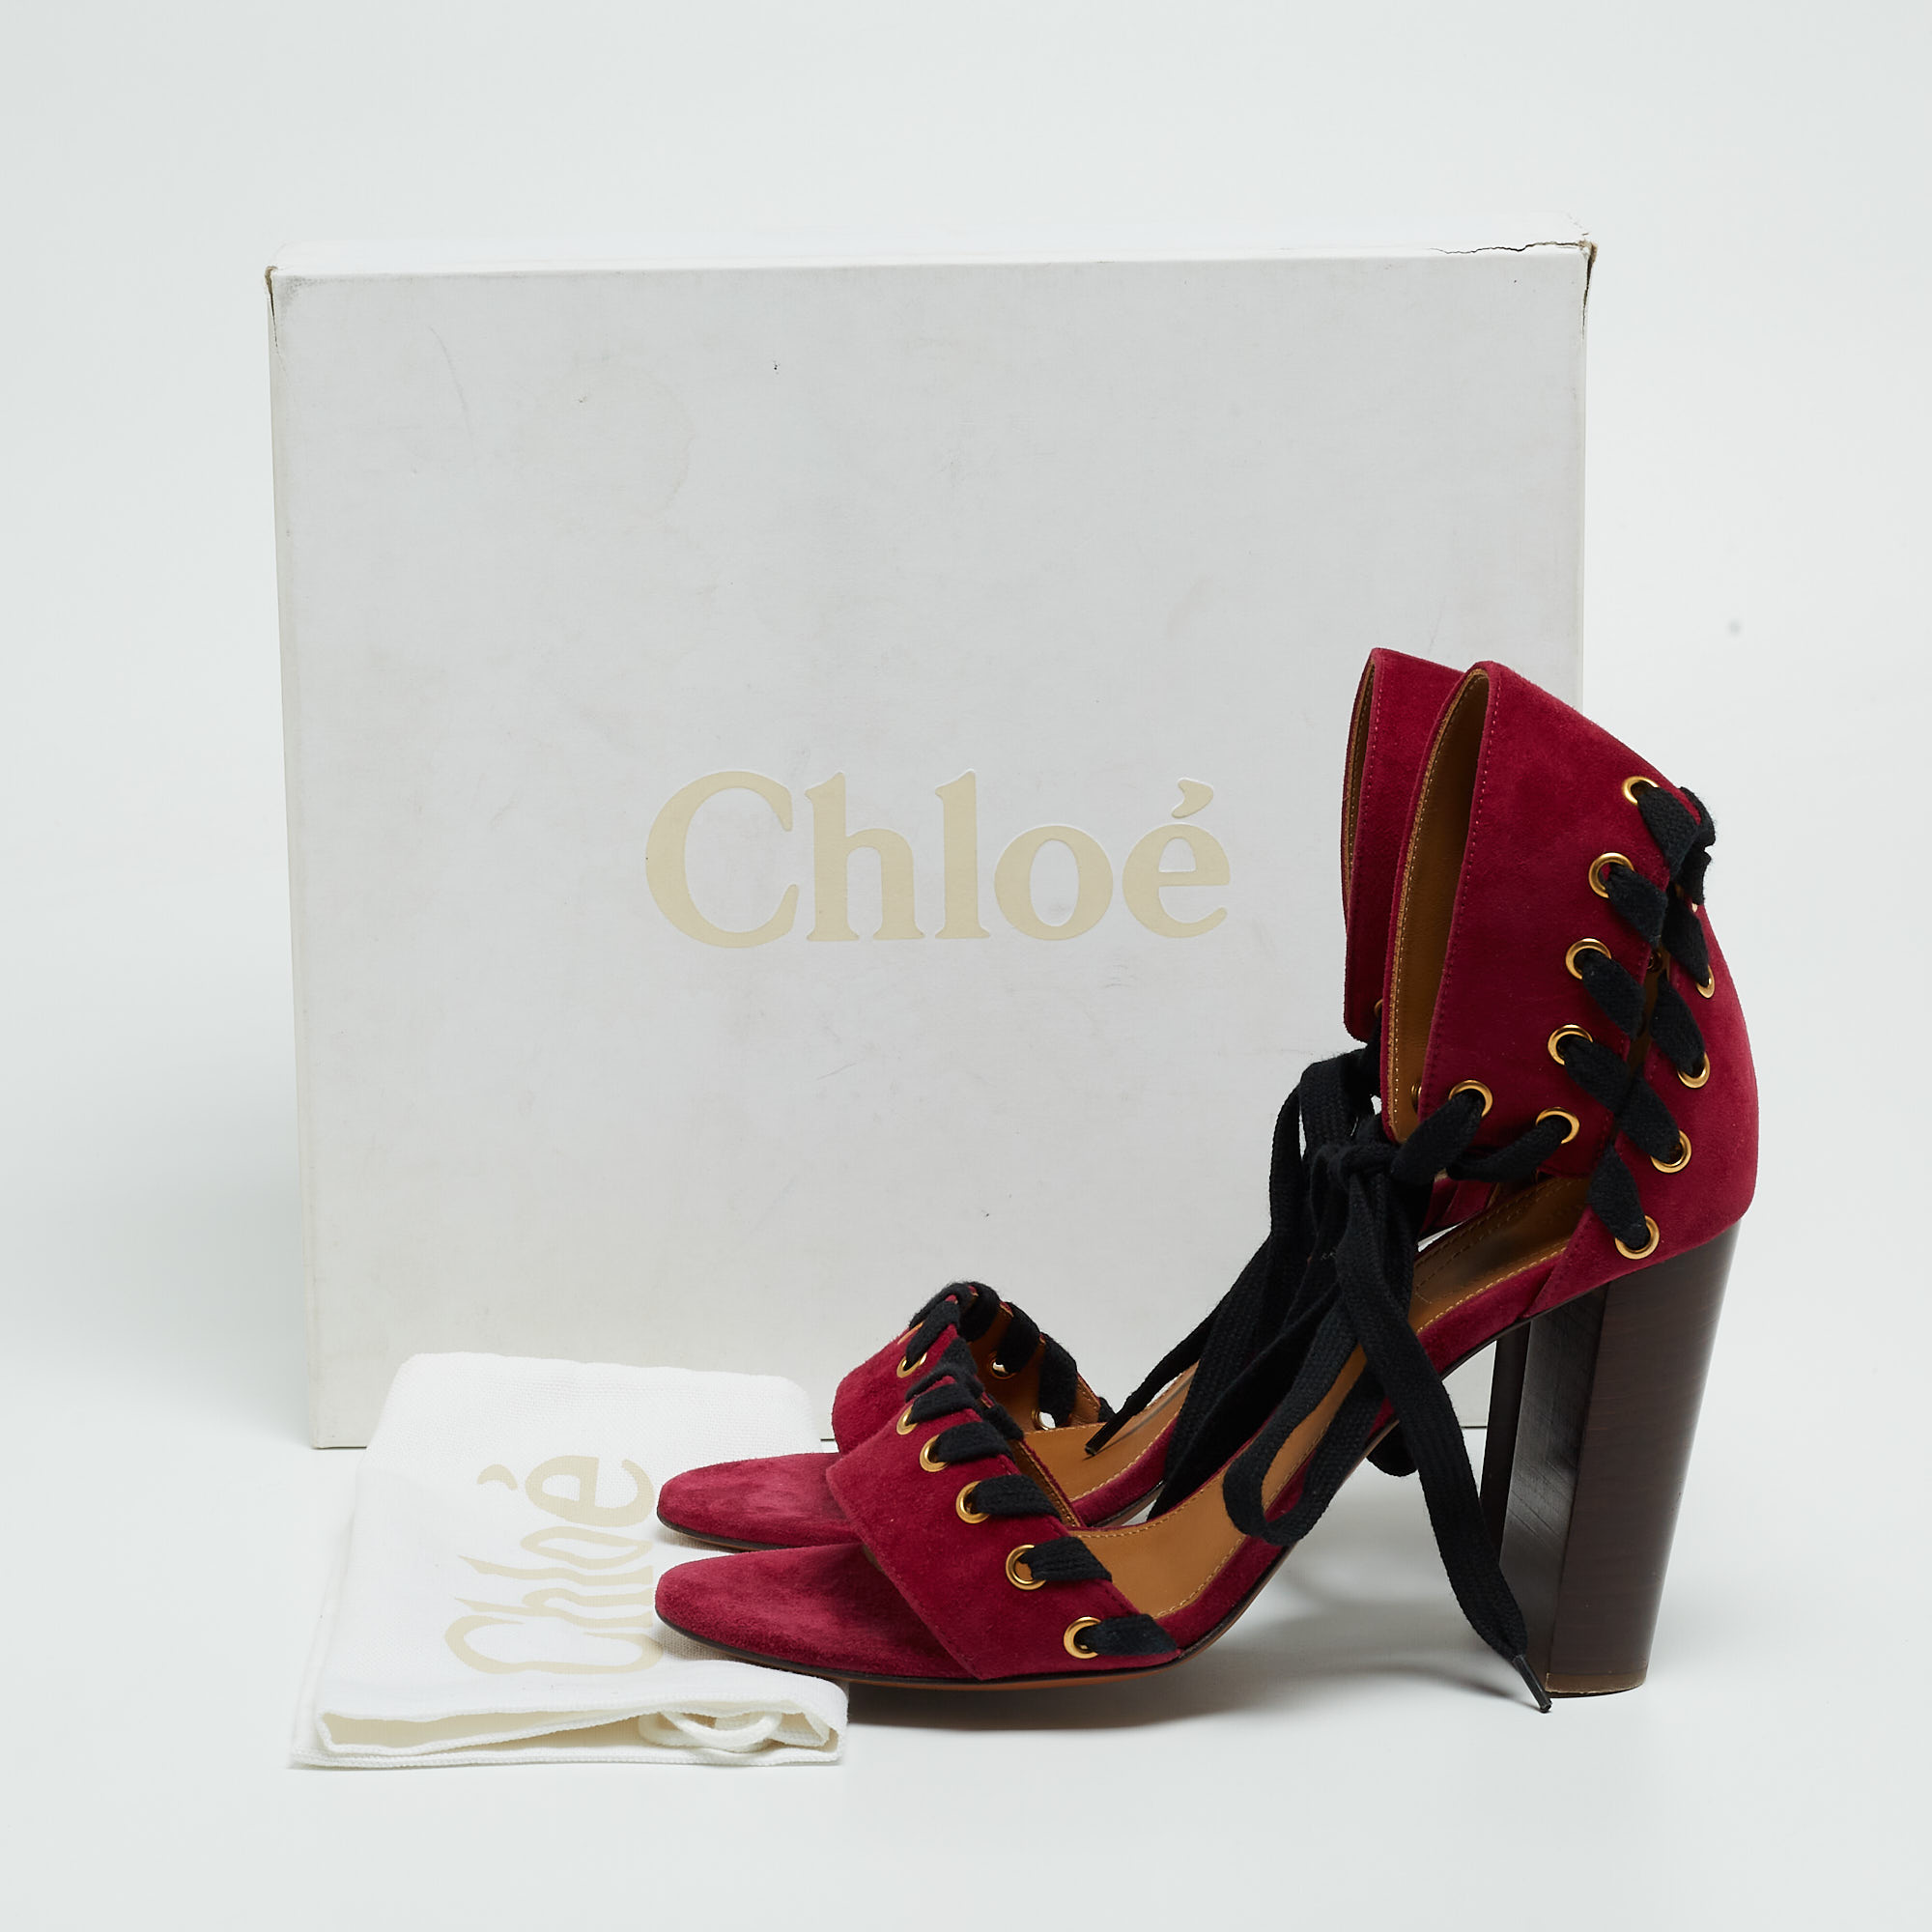 Chloe Purple Suede Ankle Strap Sandals Size 40